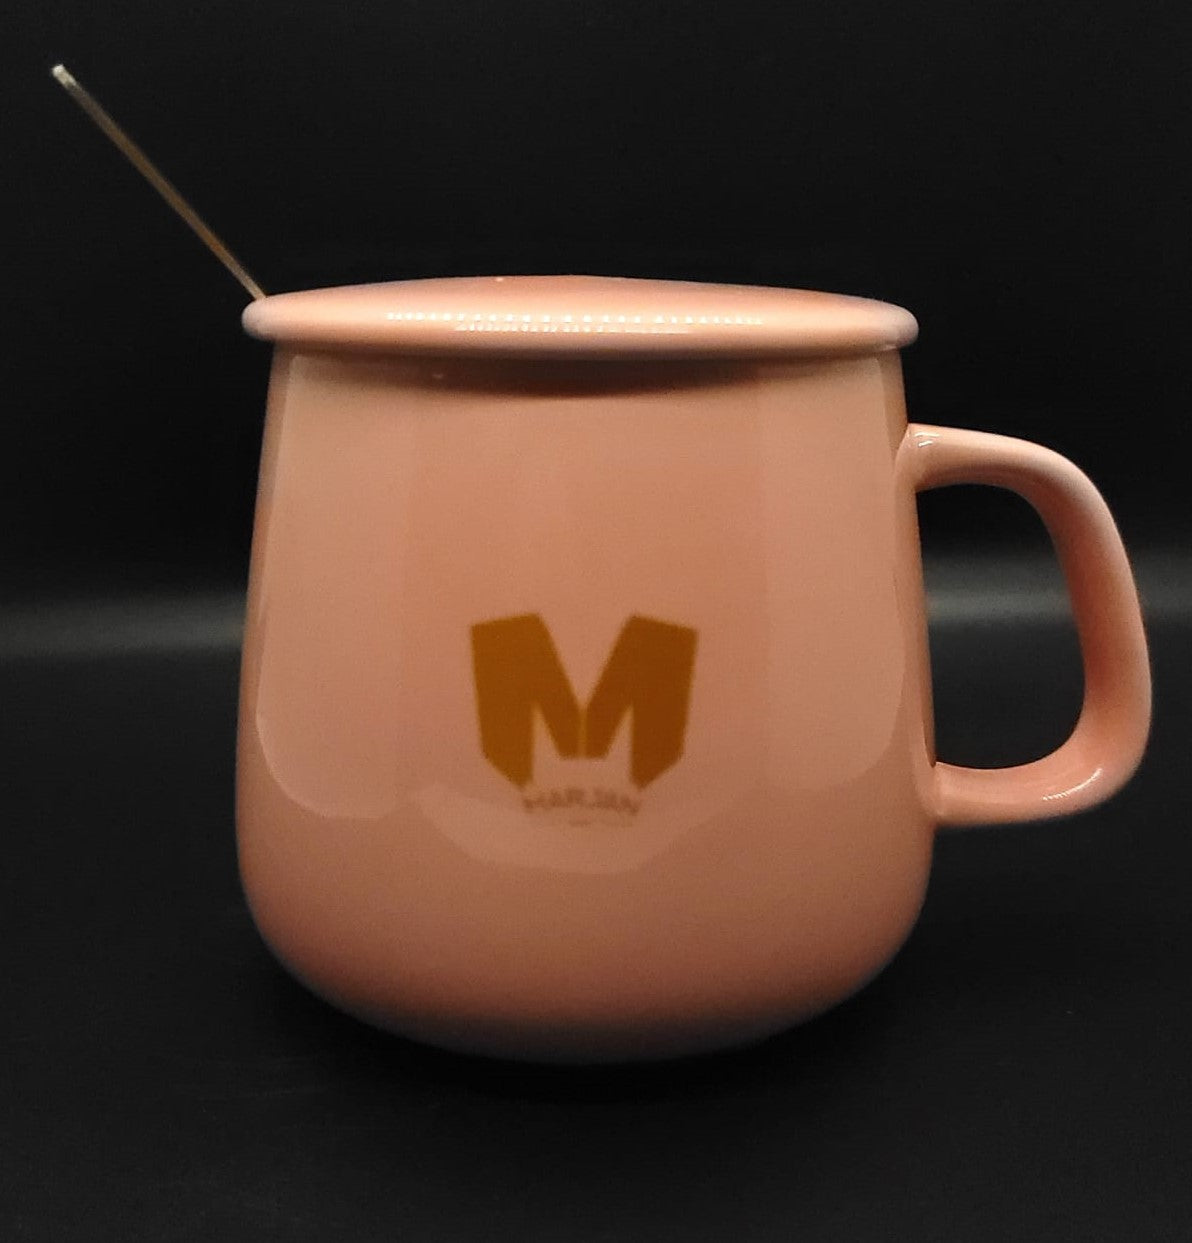 Smart Ceramic Sublimation Mug and Constant Temperature 55 Degree USB Electric Mug Warmer